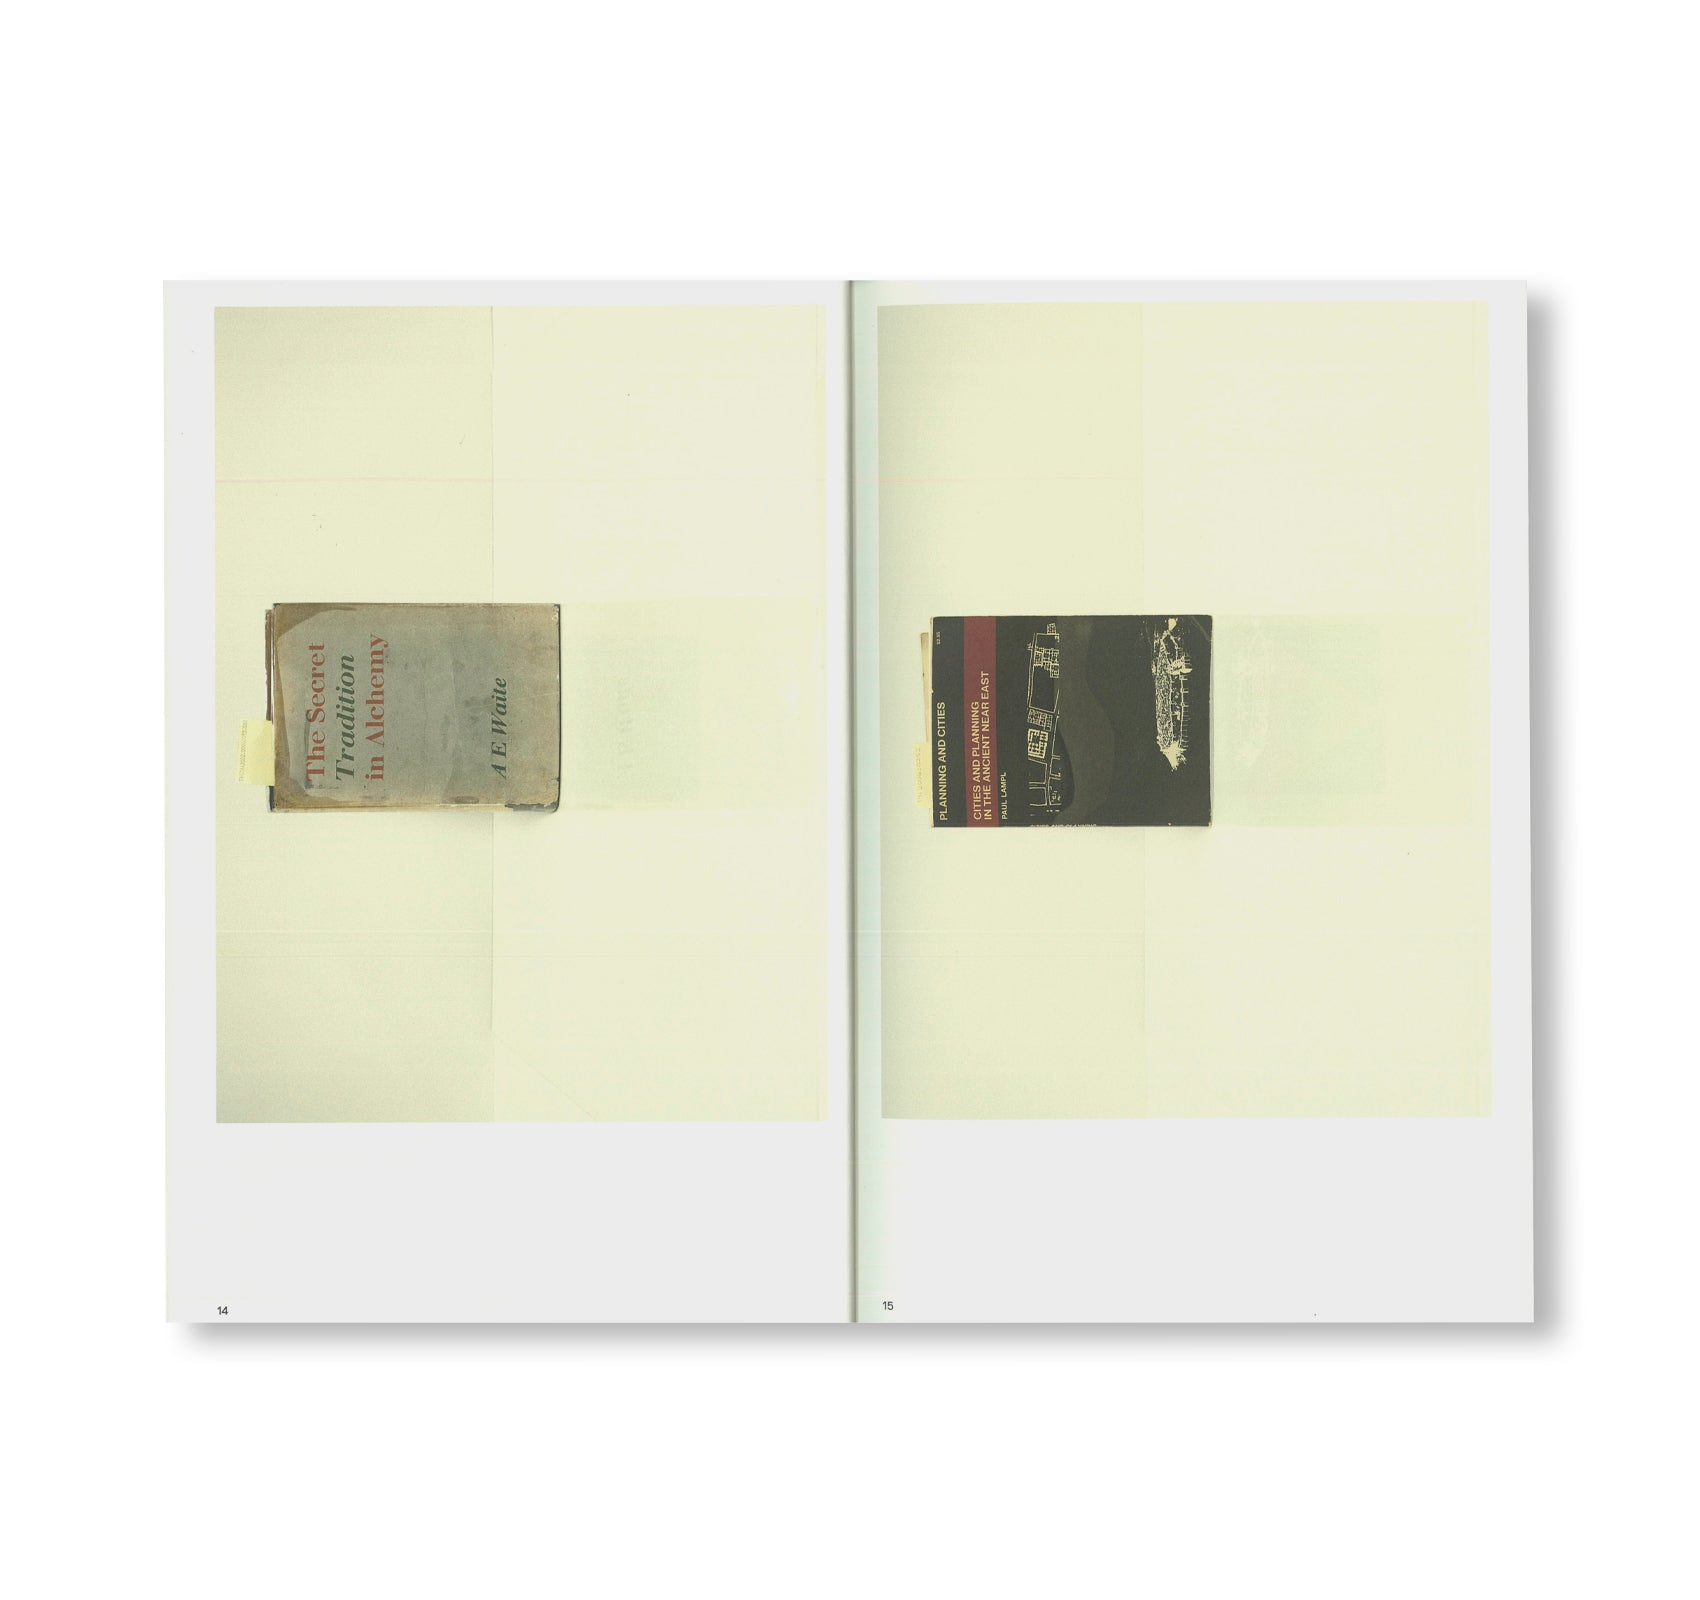 DOCUMENTS FROM GORDON MATTA-CLARK'S PERSONAL LIBRARY by Stefano Graziani